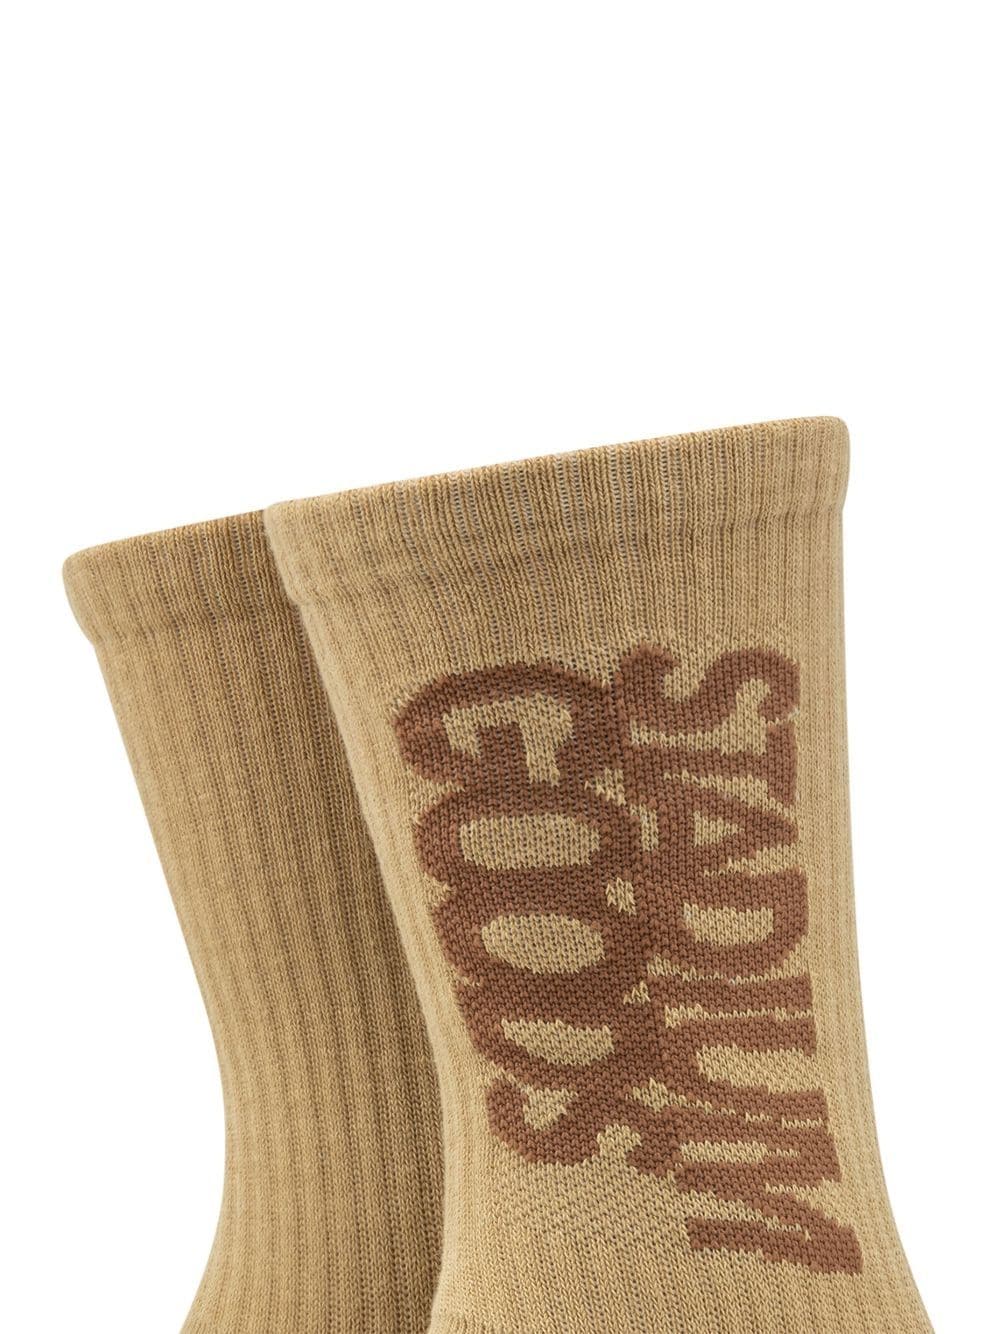 Image 2 of STADIUM GOODS® Crew Socks "Cappuccino" sneakers